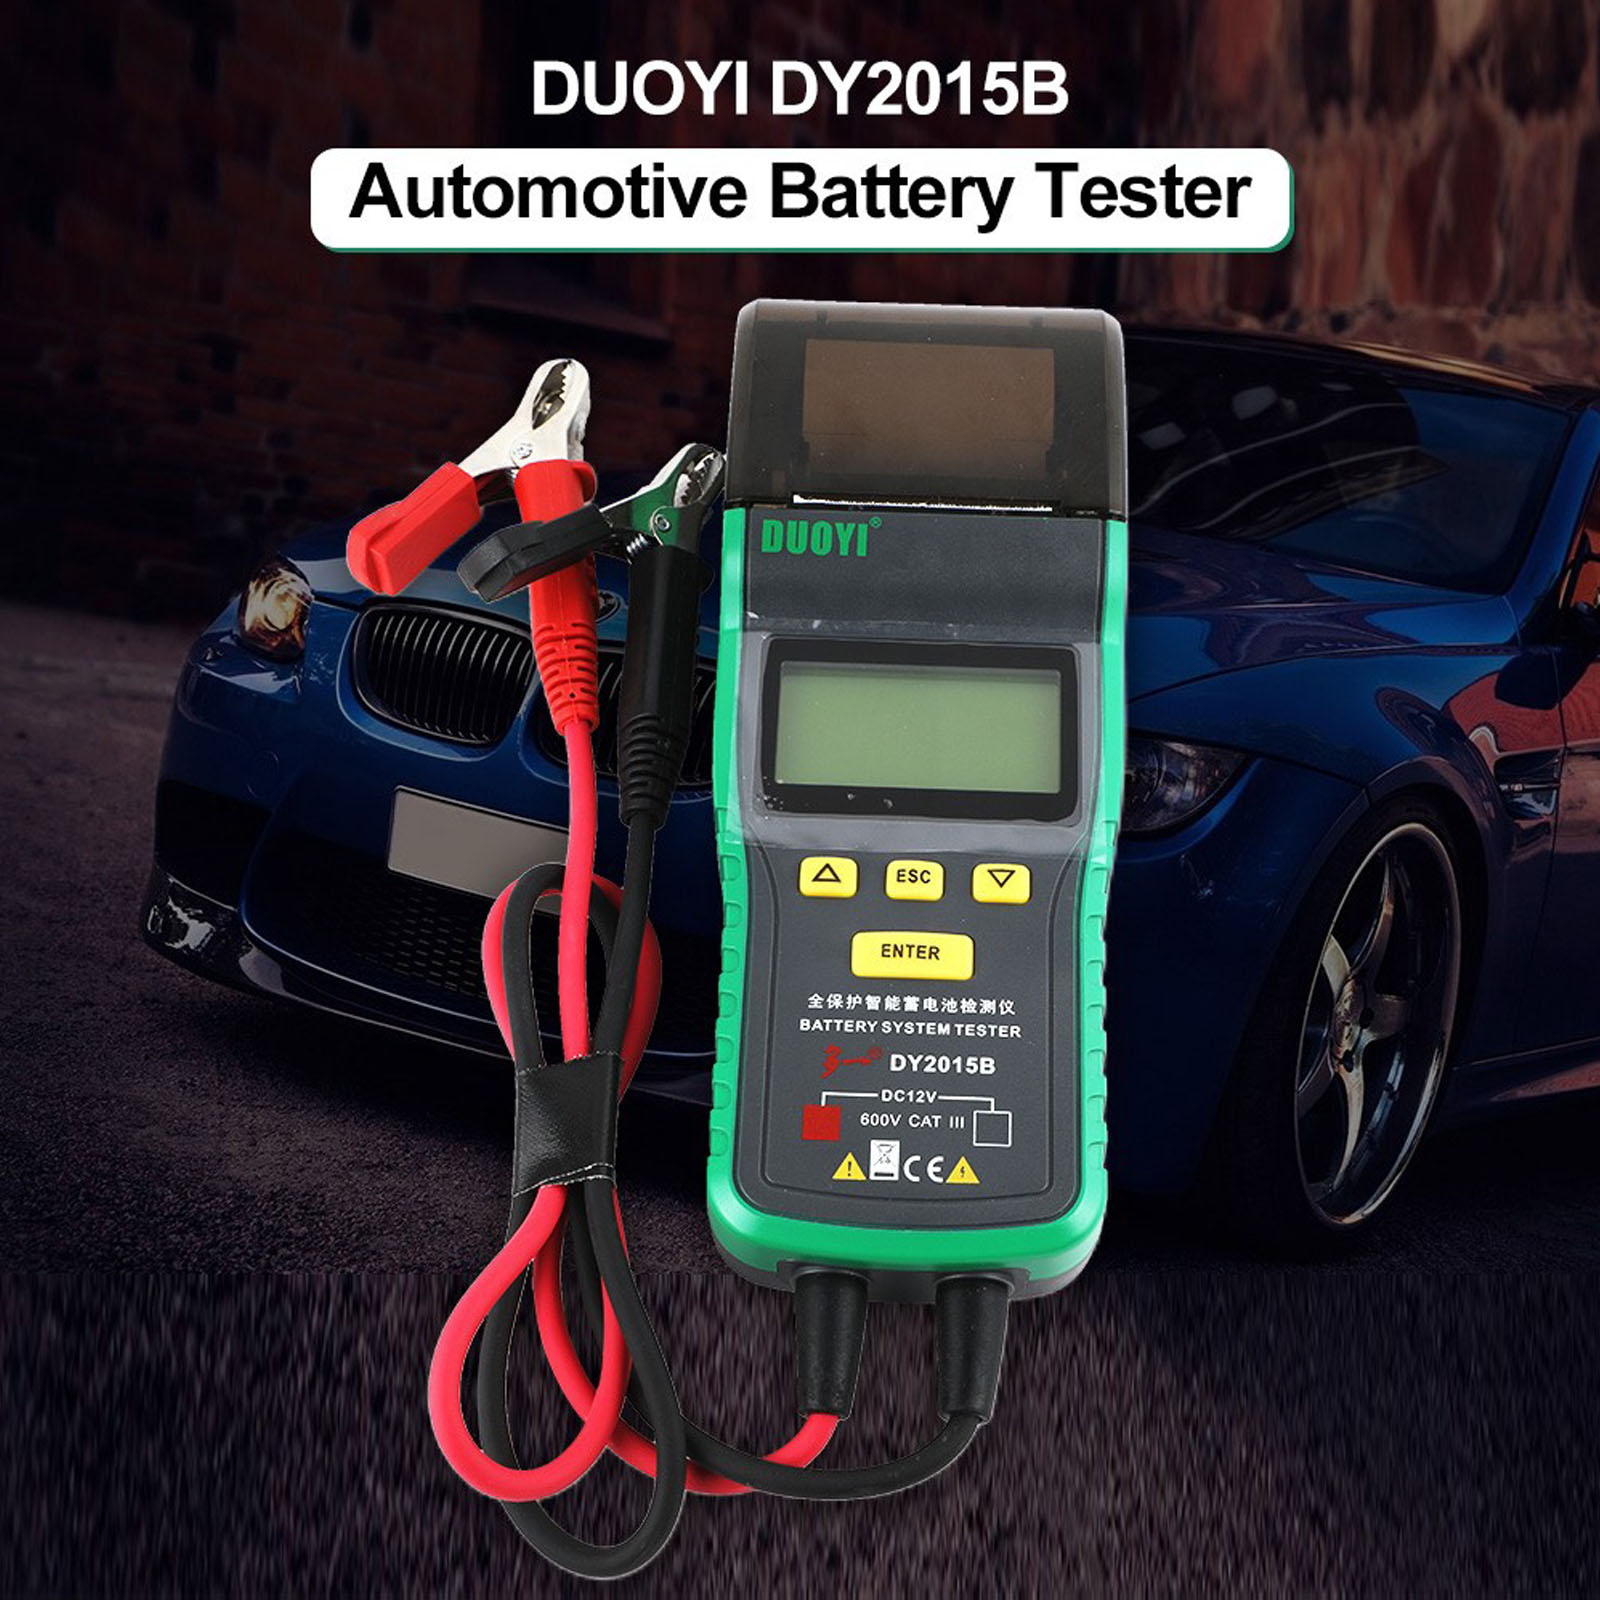 DY2015B 12V Automotive Car Battery System Tester Analyzer with Thermal Printer